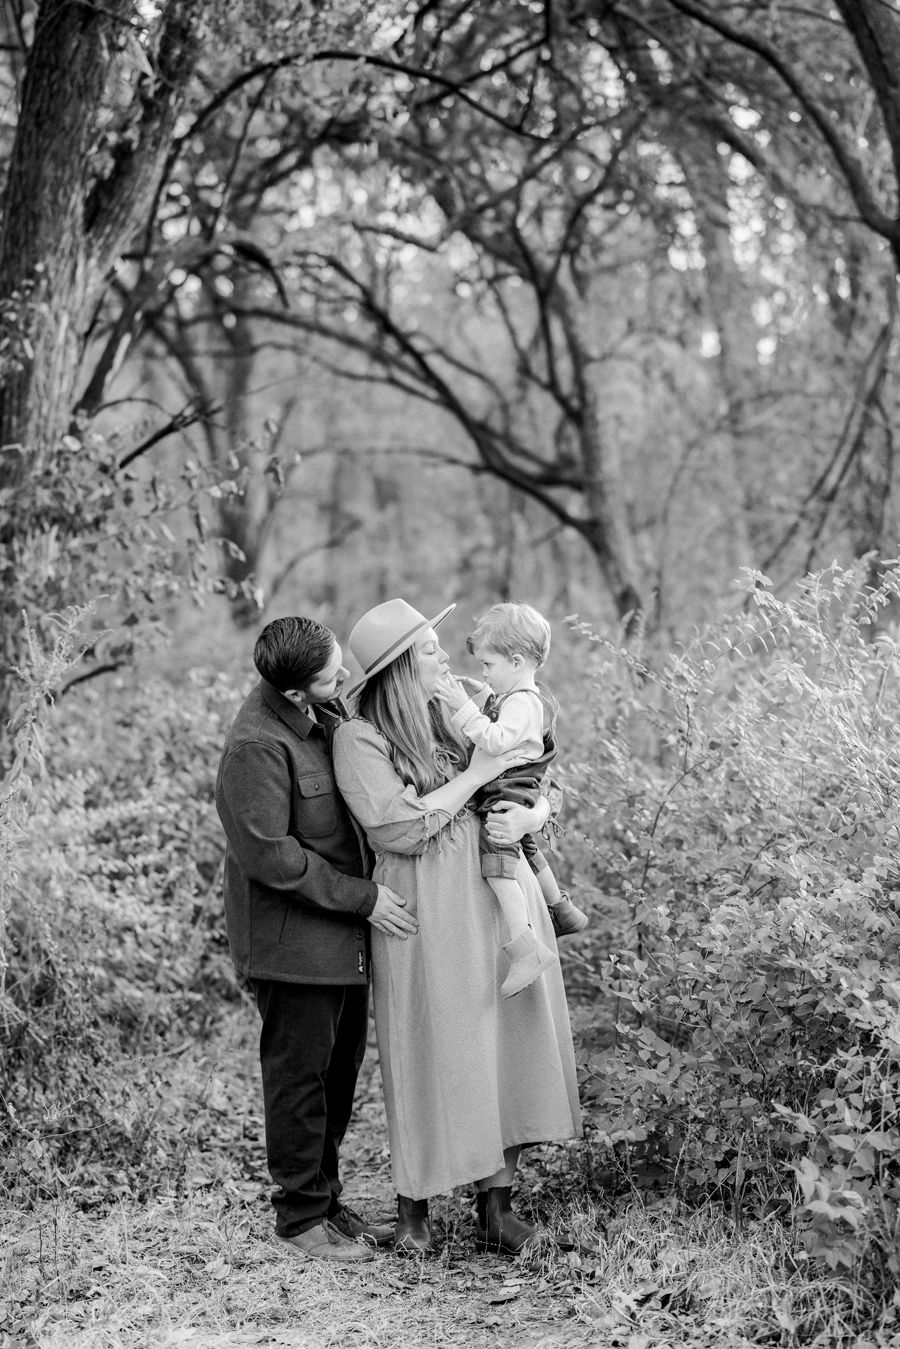 Fall outdoor family portrait by Missouri family photographer Love Tree Studios.